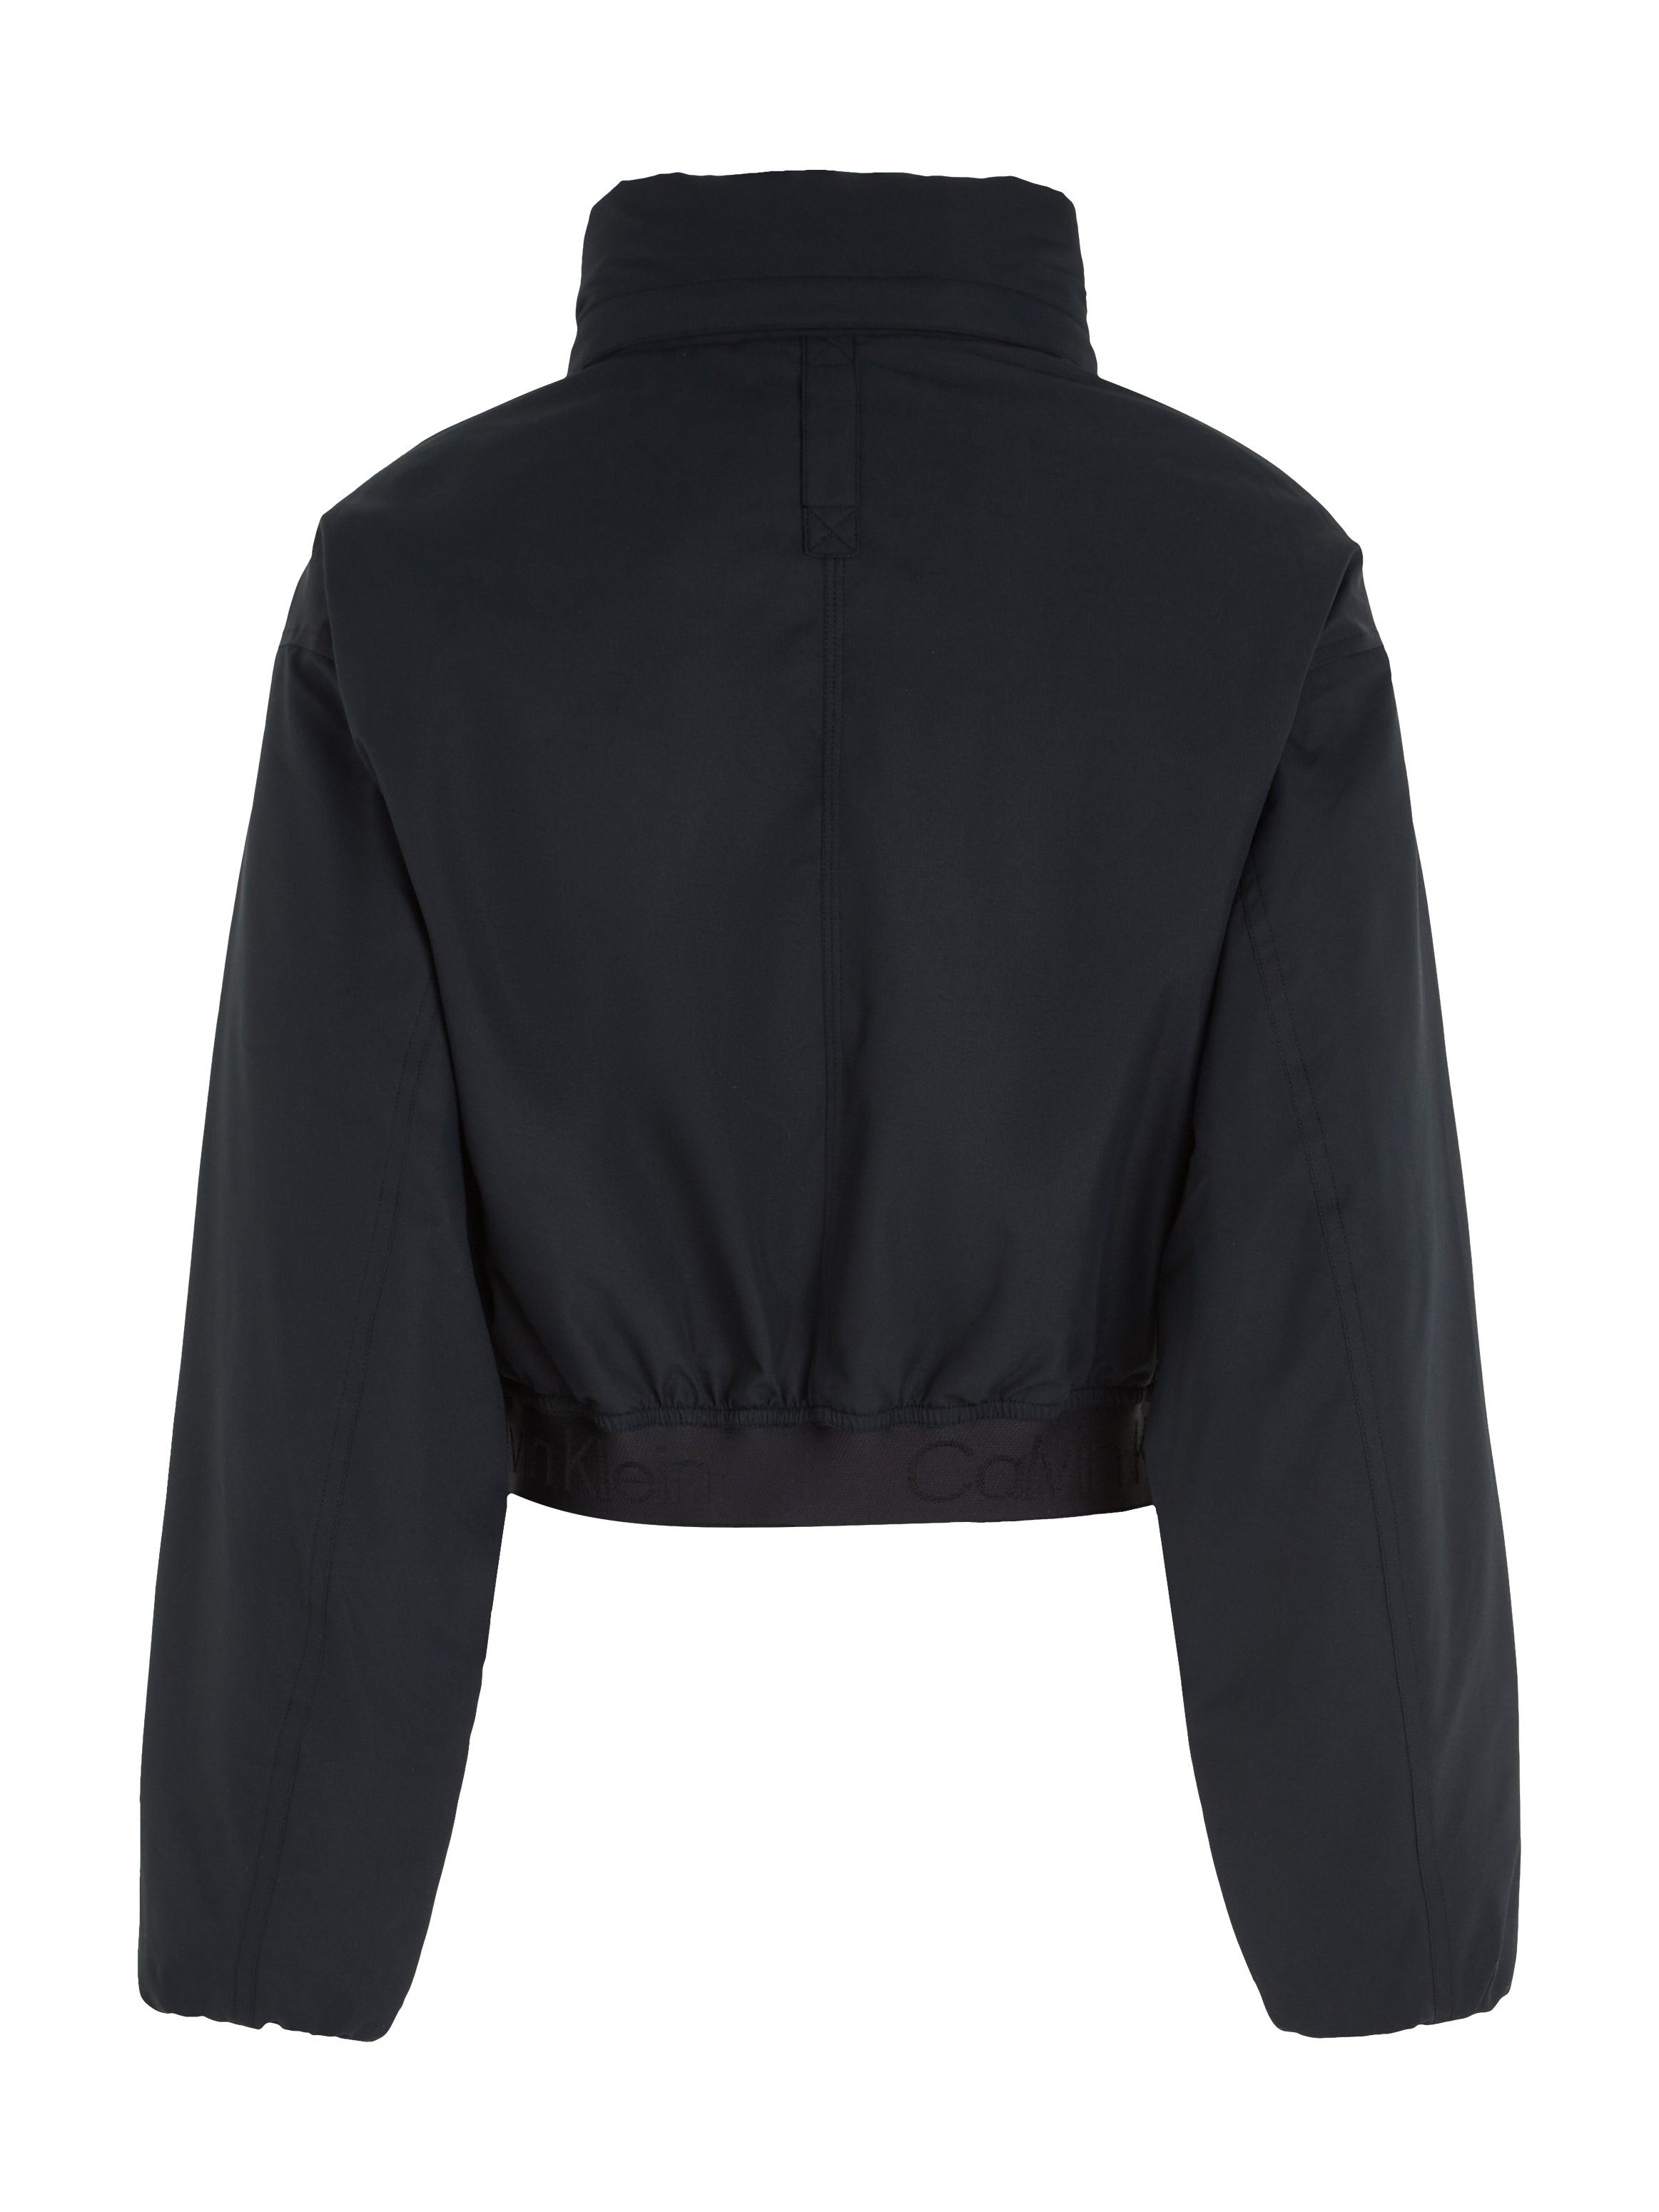 Calvin Klein Sport Outdoorjacke Padded PW - Jacket schwarz